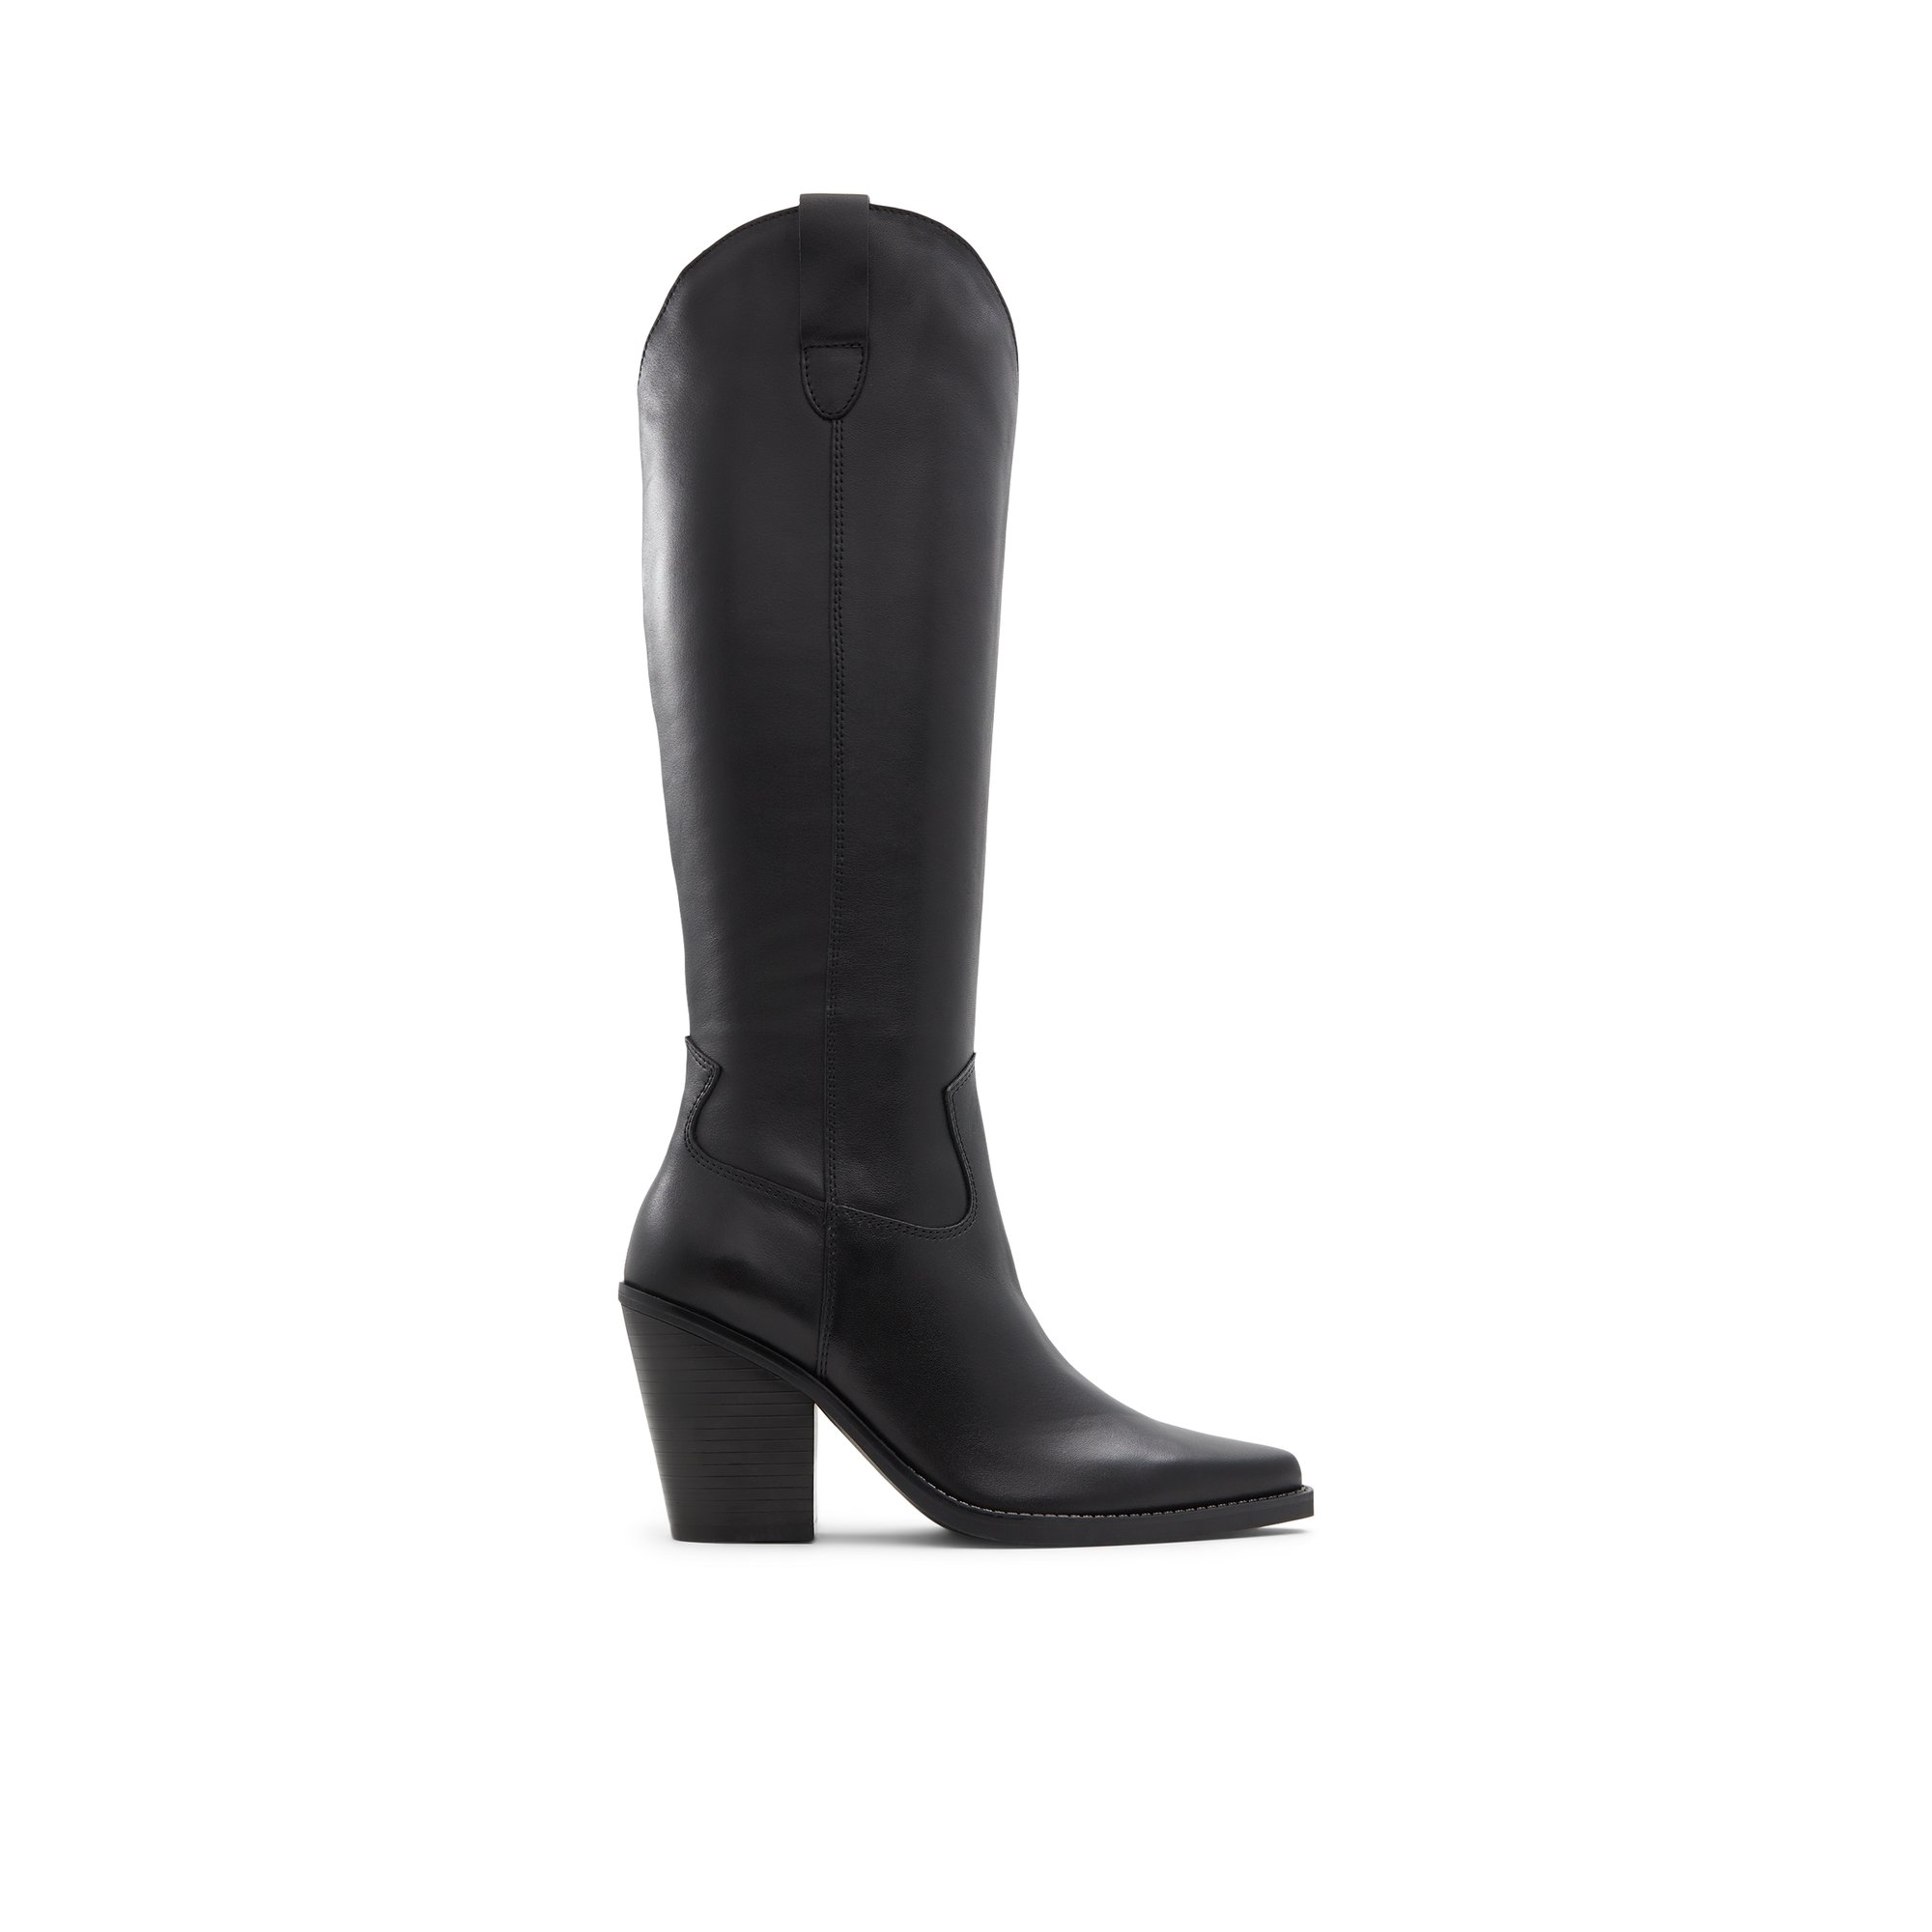 ALDO Nevada - Women's Boots Tall - Black